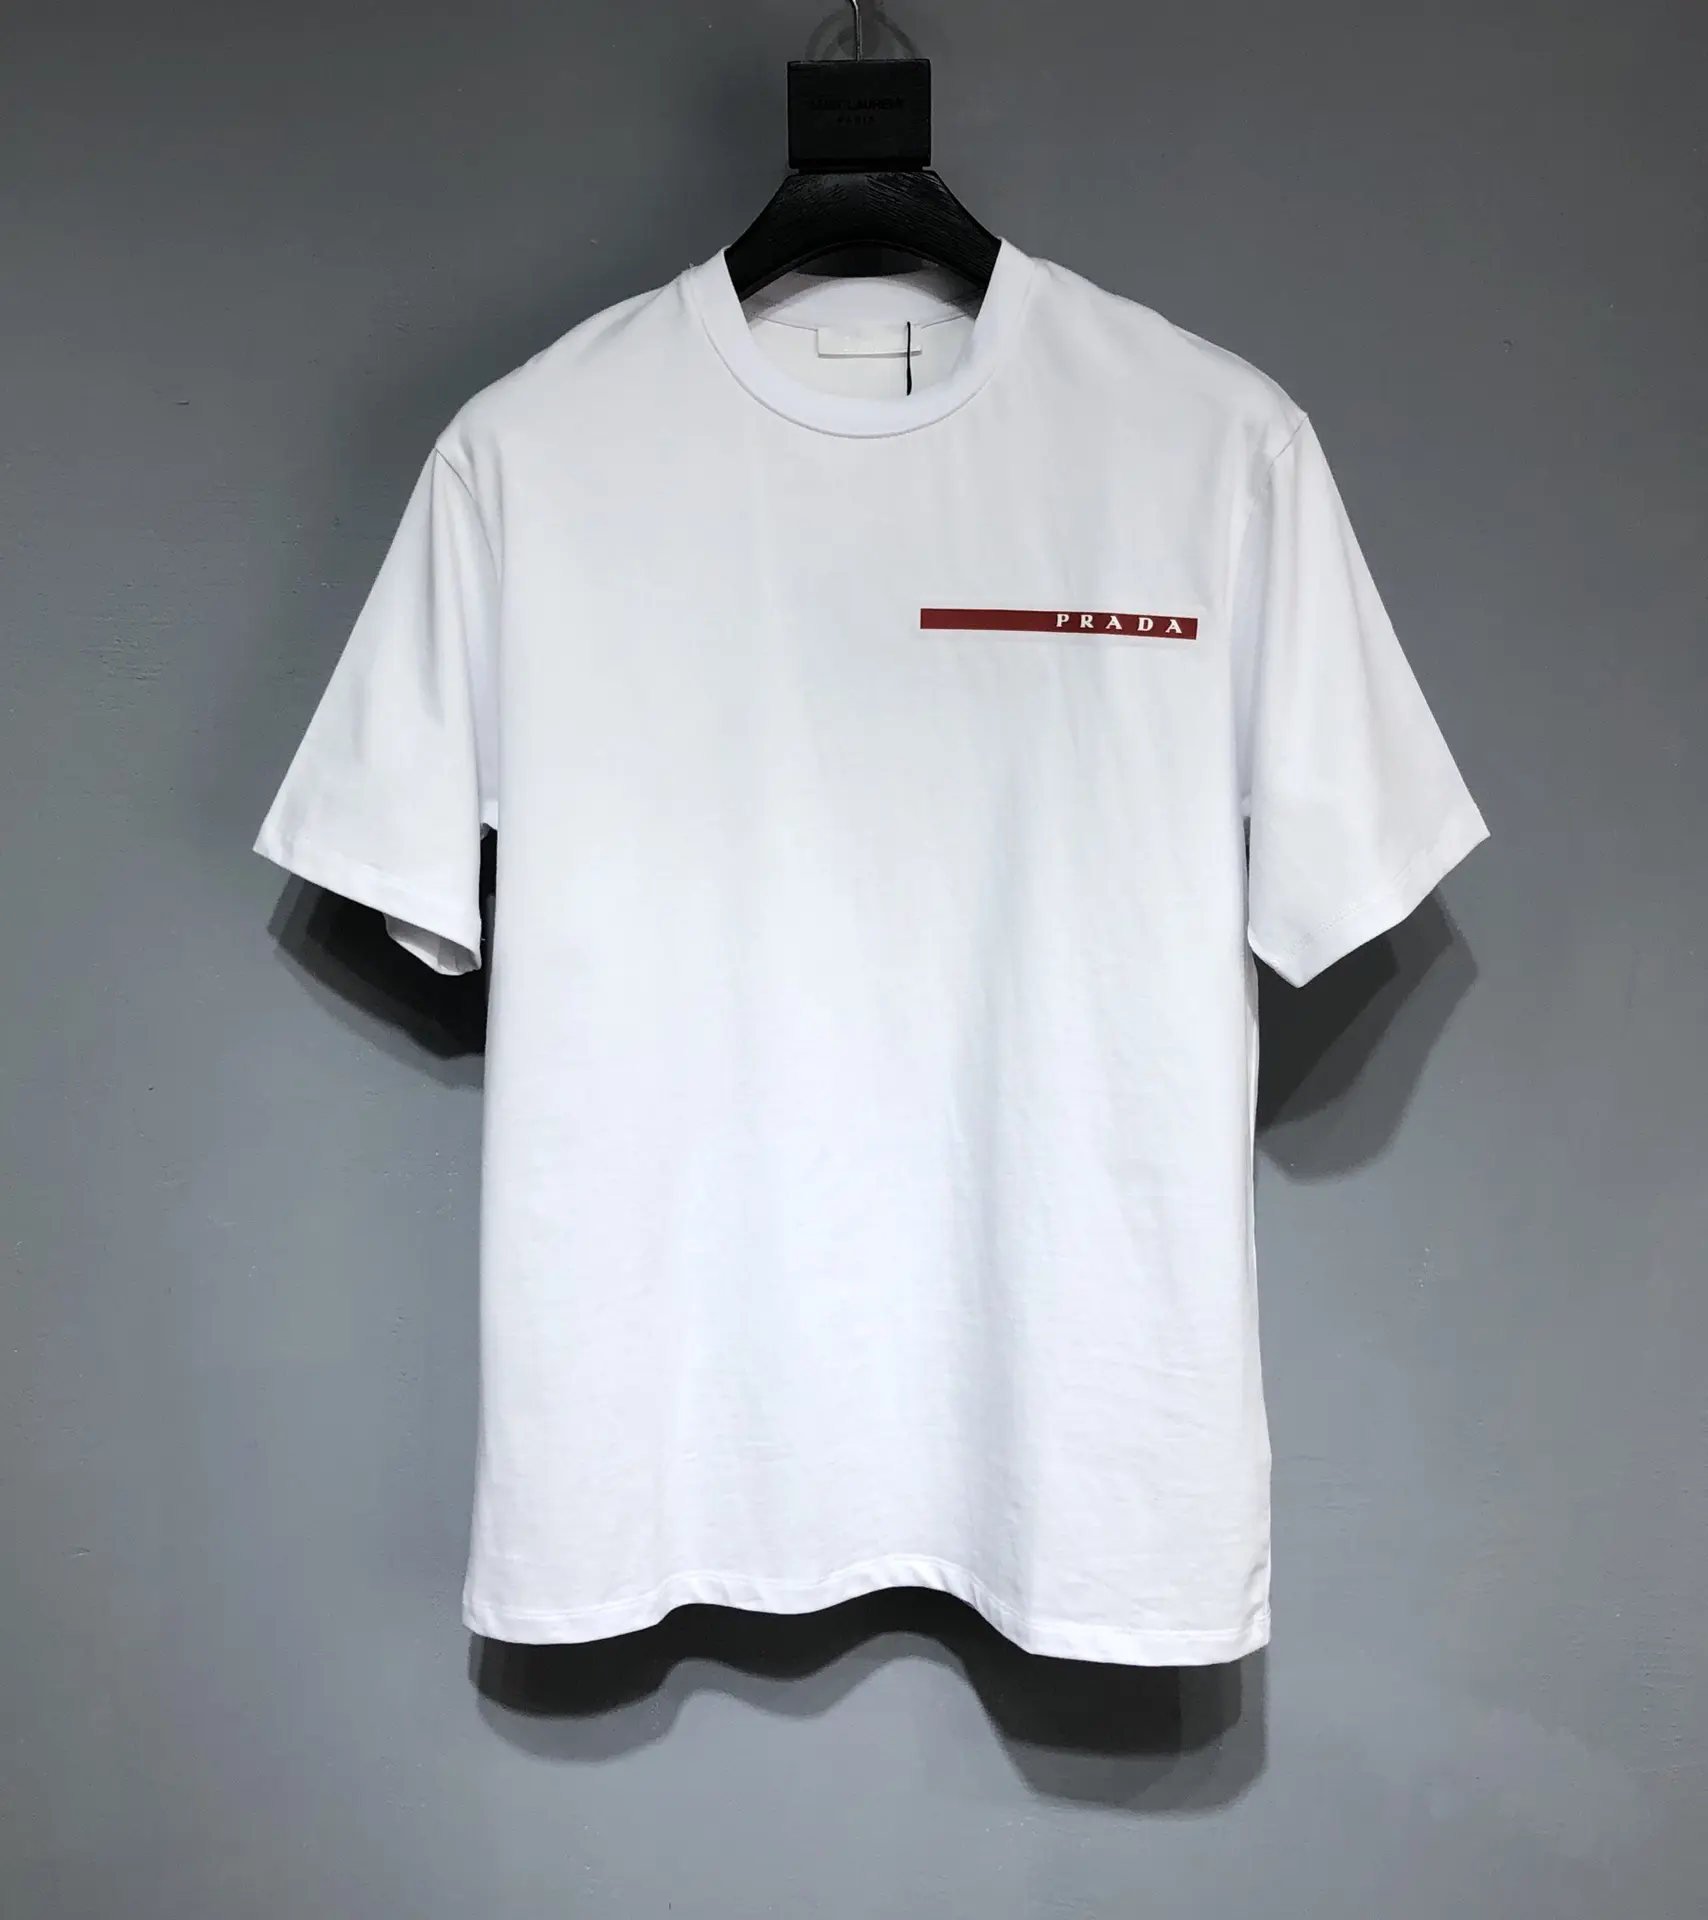 PRADA 2022SS fashion T-shirt in white